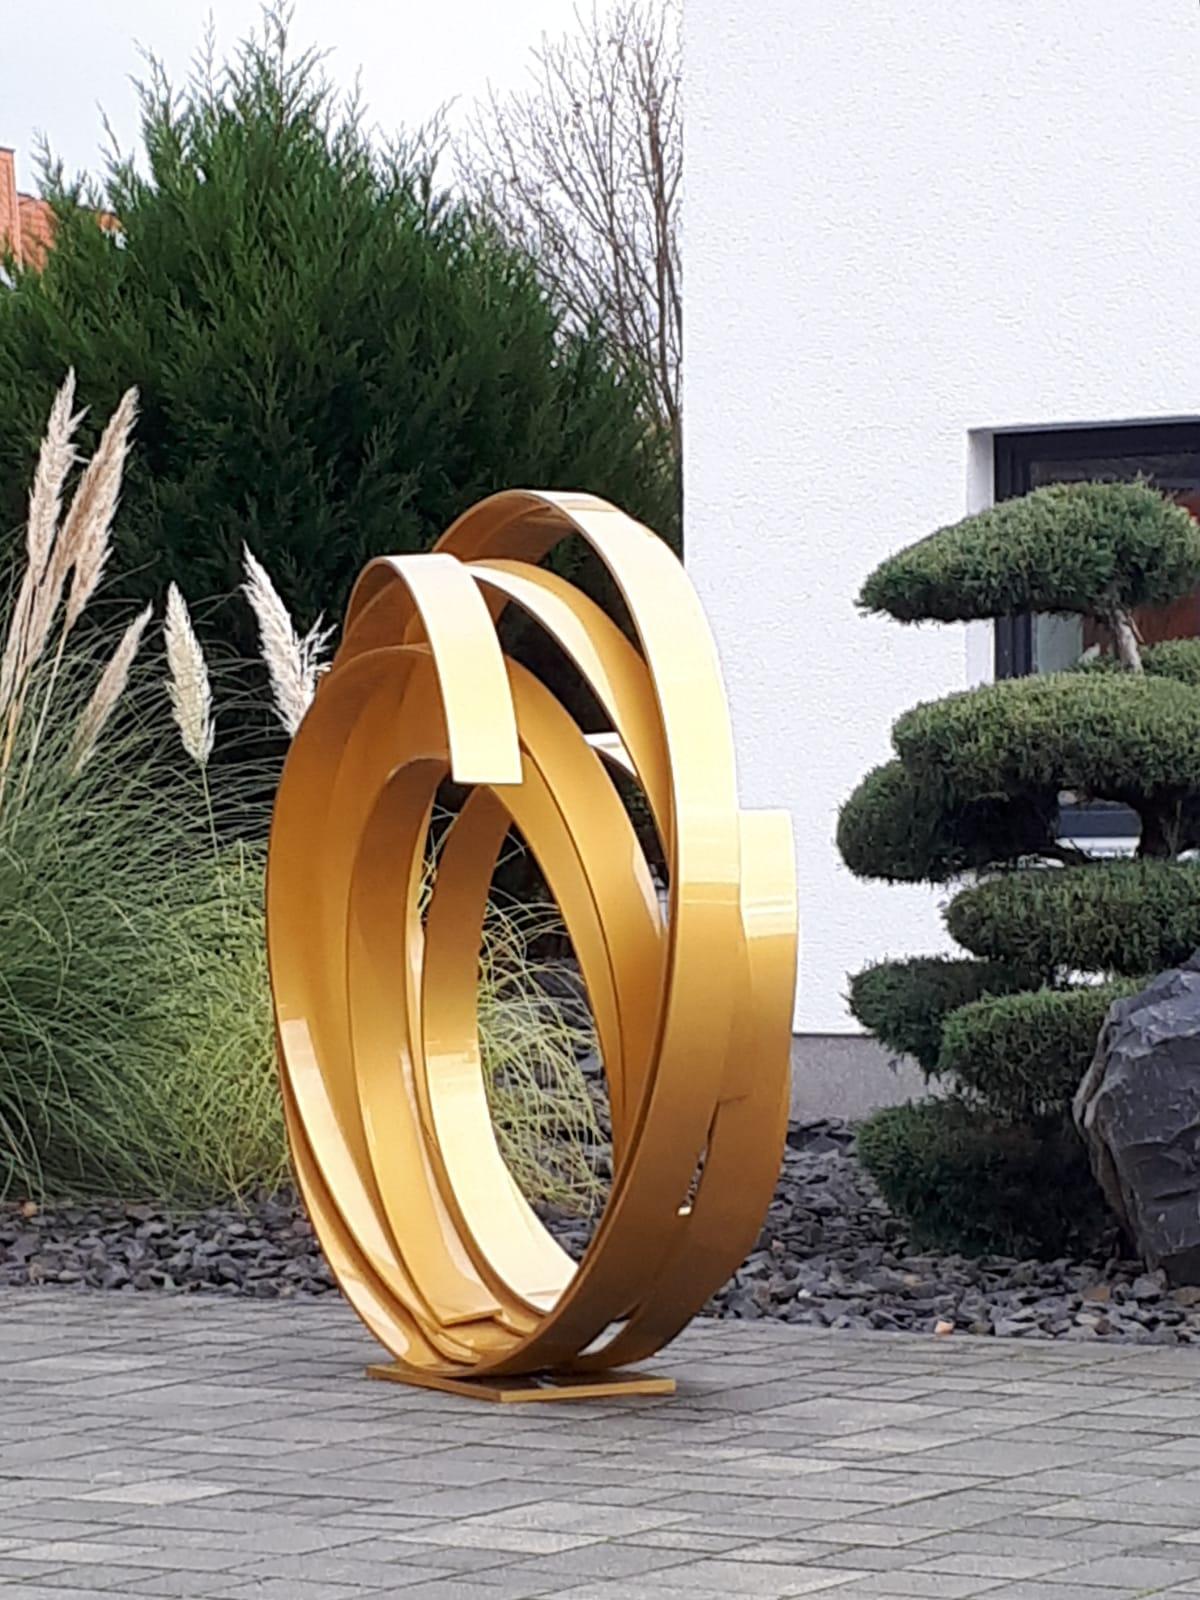 Golden Orbit Contemporary Aluminum  sculpture for Outdoors - Abstract Sculpture by Kuno Vollet